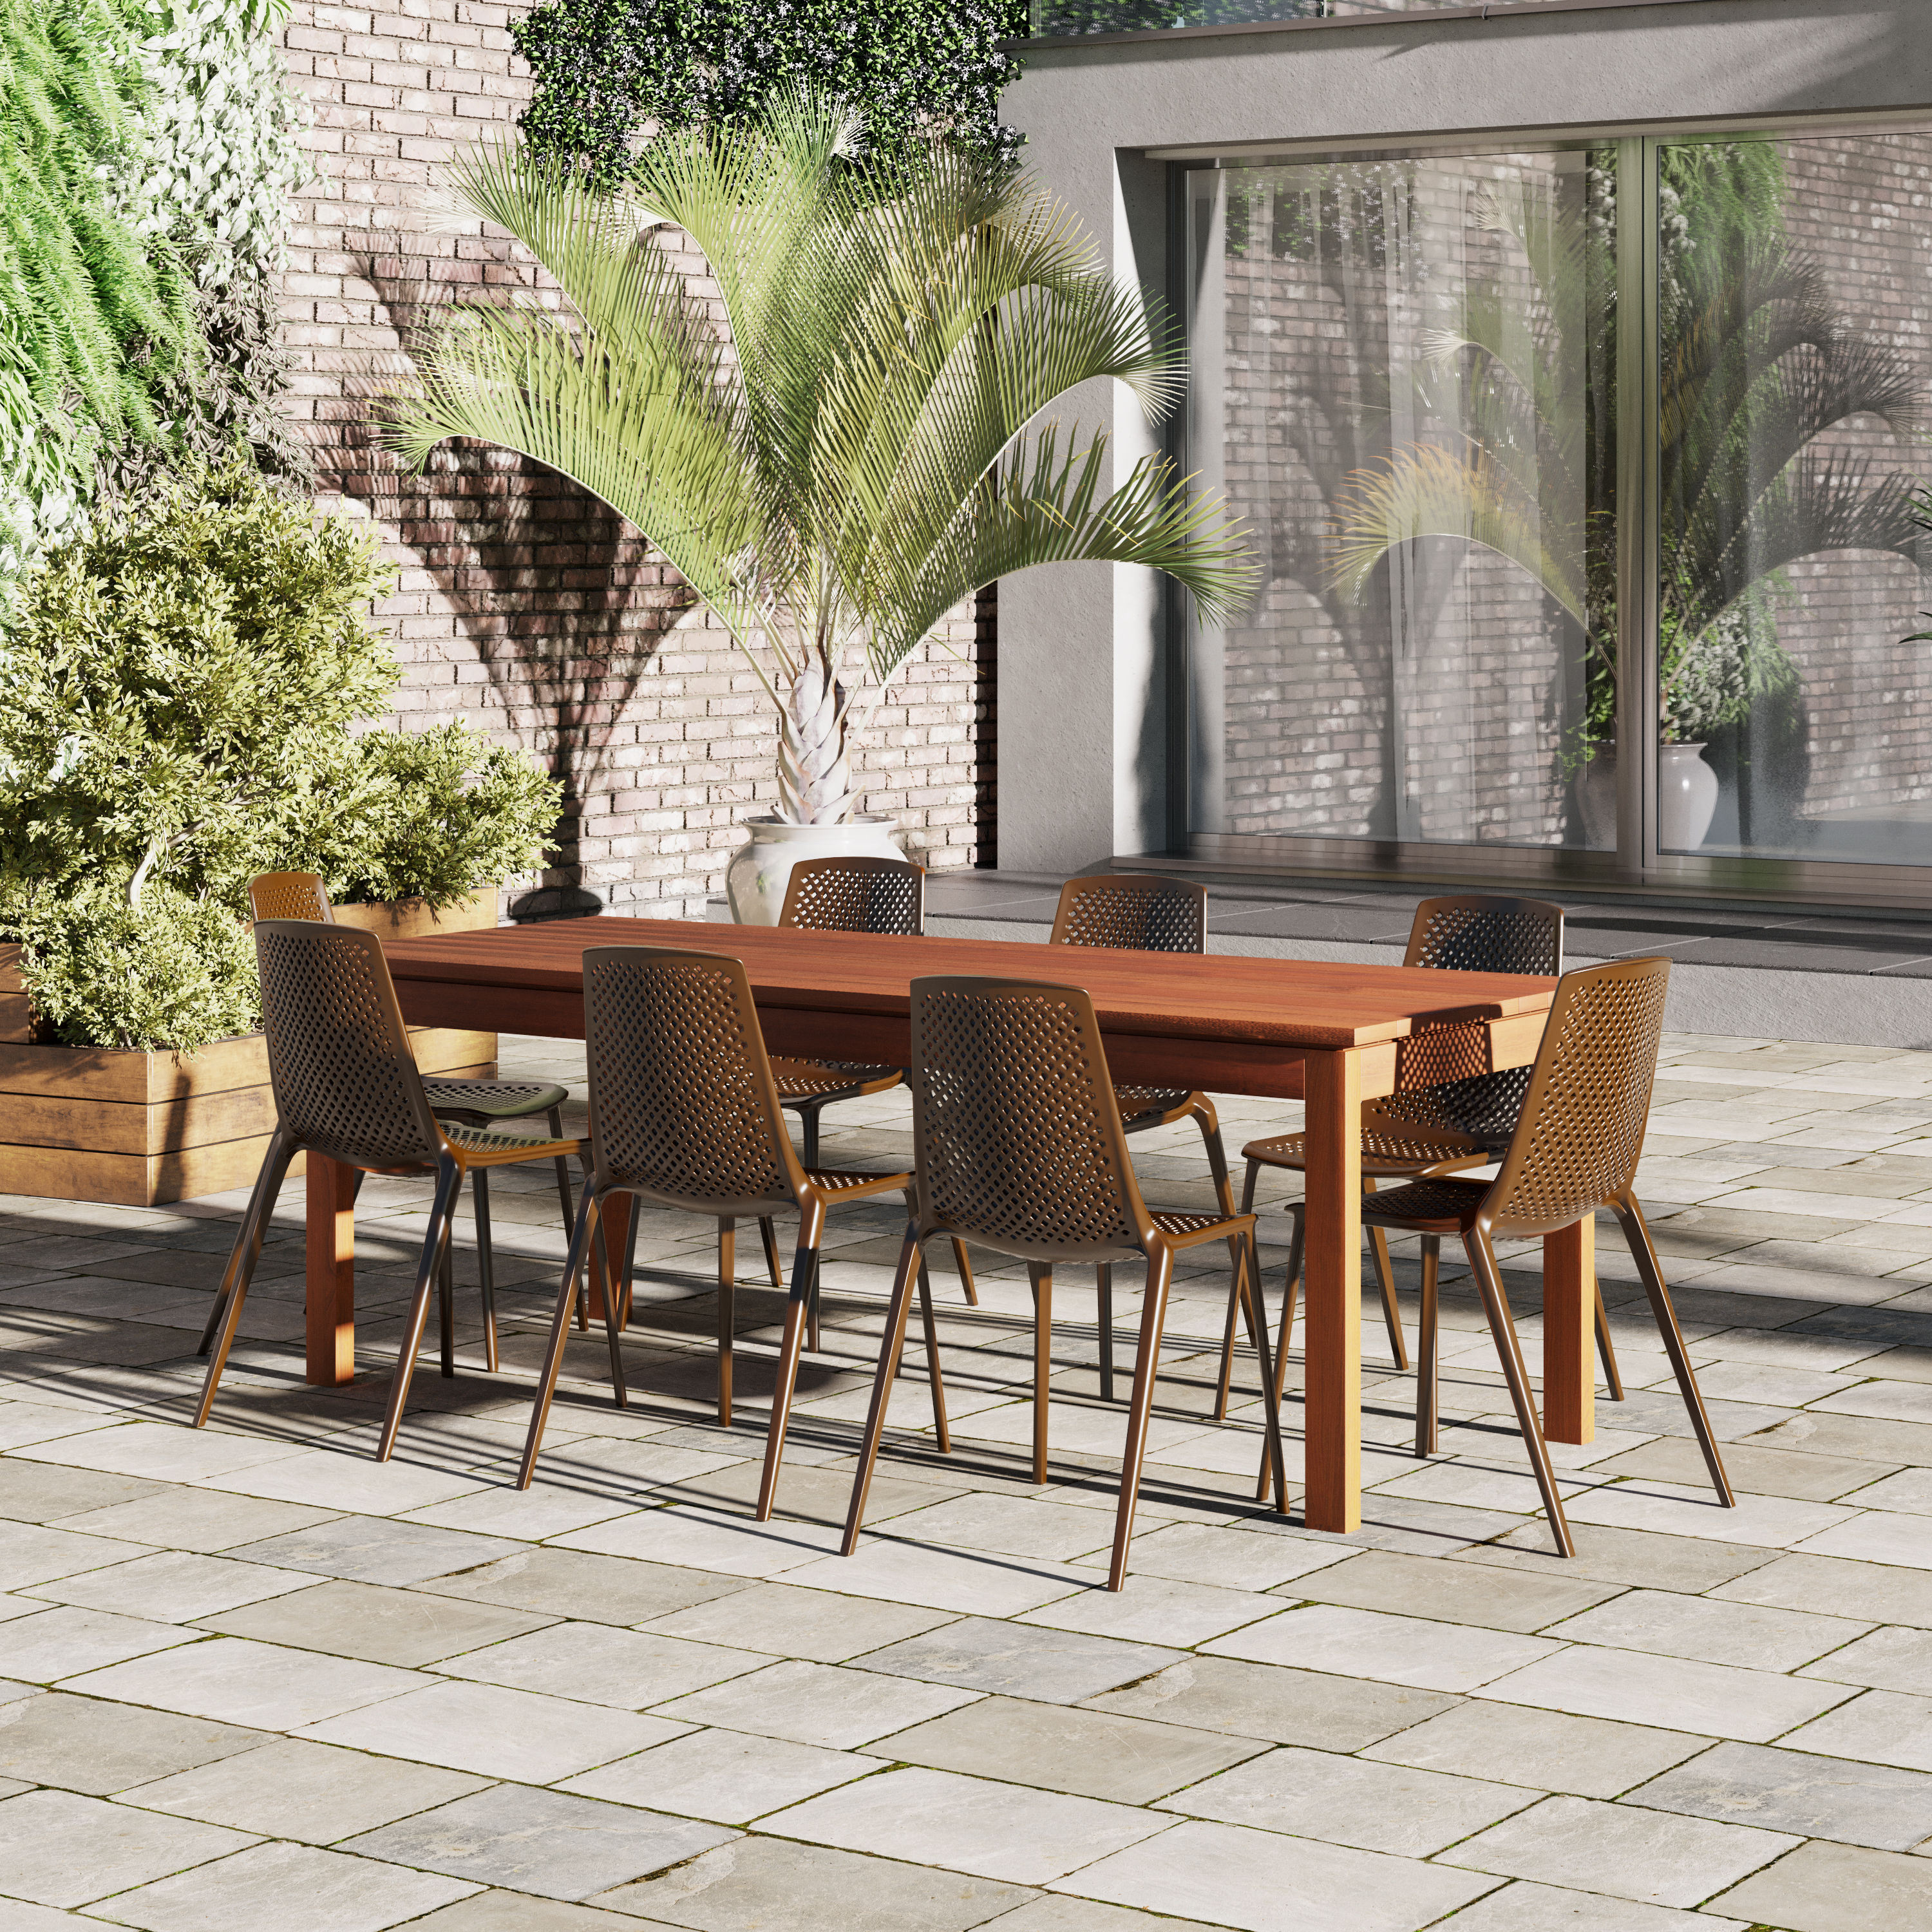 Outdoor Natural Finish Eucalyptus Wood Umbrella Side Table End Table Patio Pool Furniture 